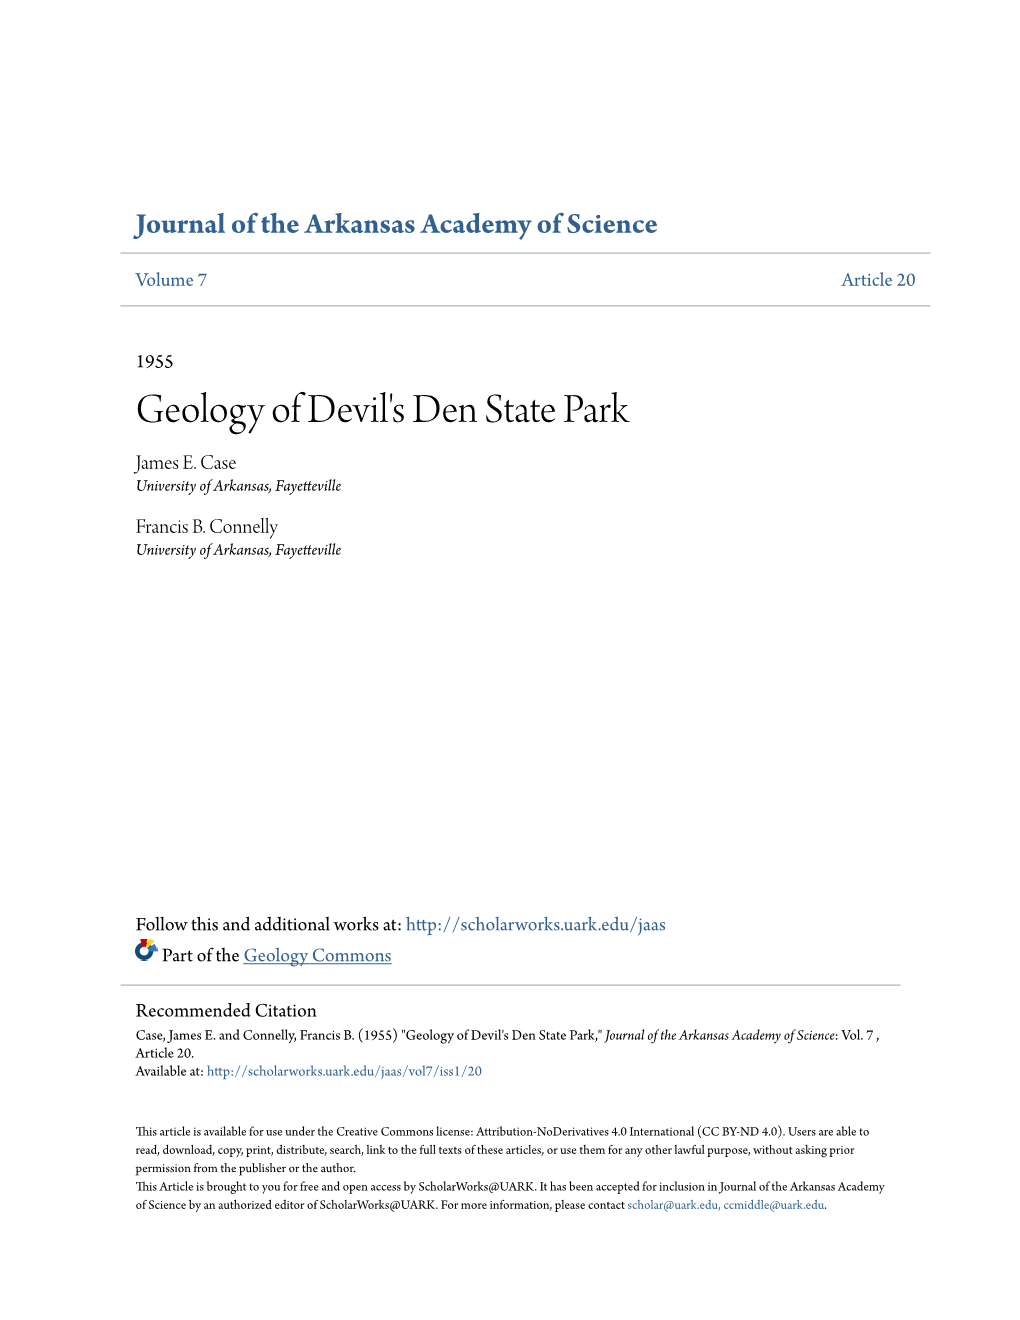 Geology of Devil's Den State Park James E